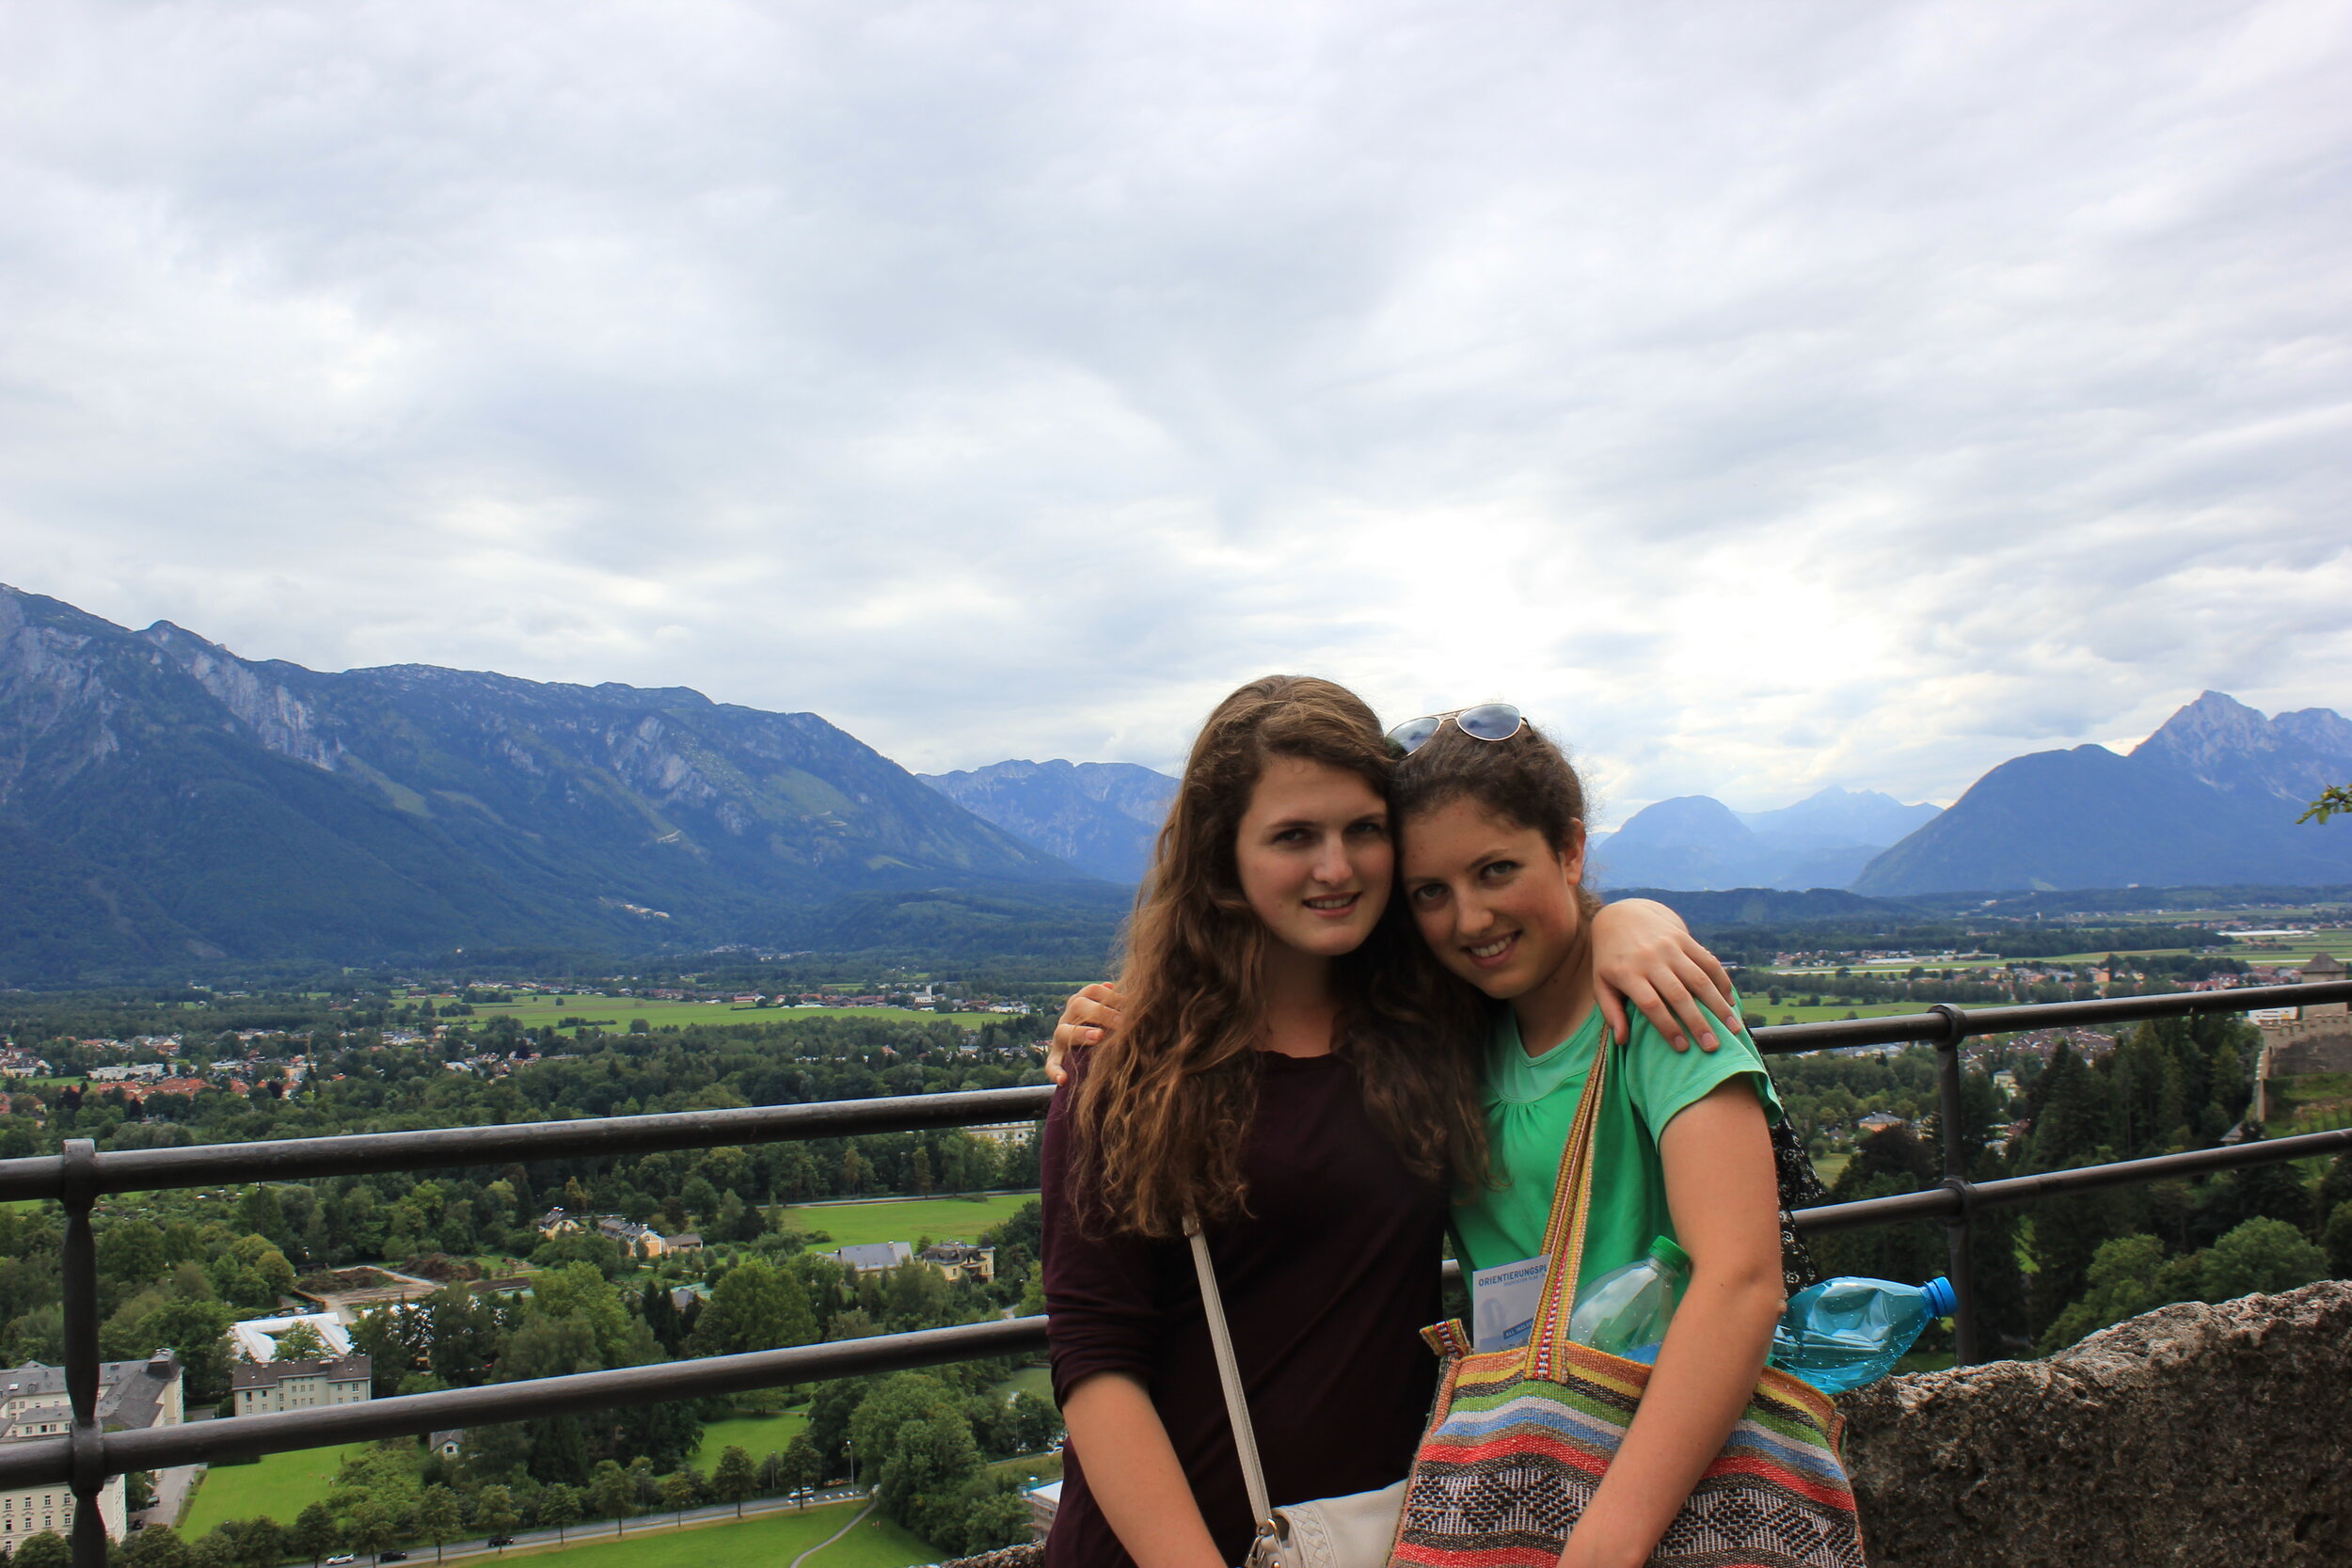  My sister and me as teenagers in Salzburg, Austria 